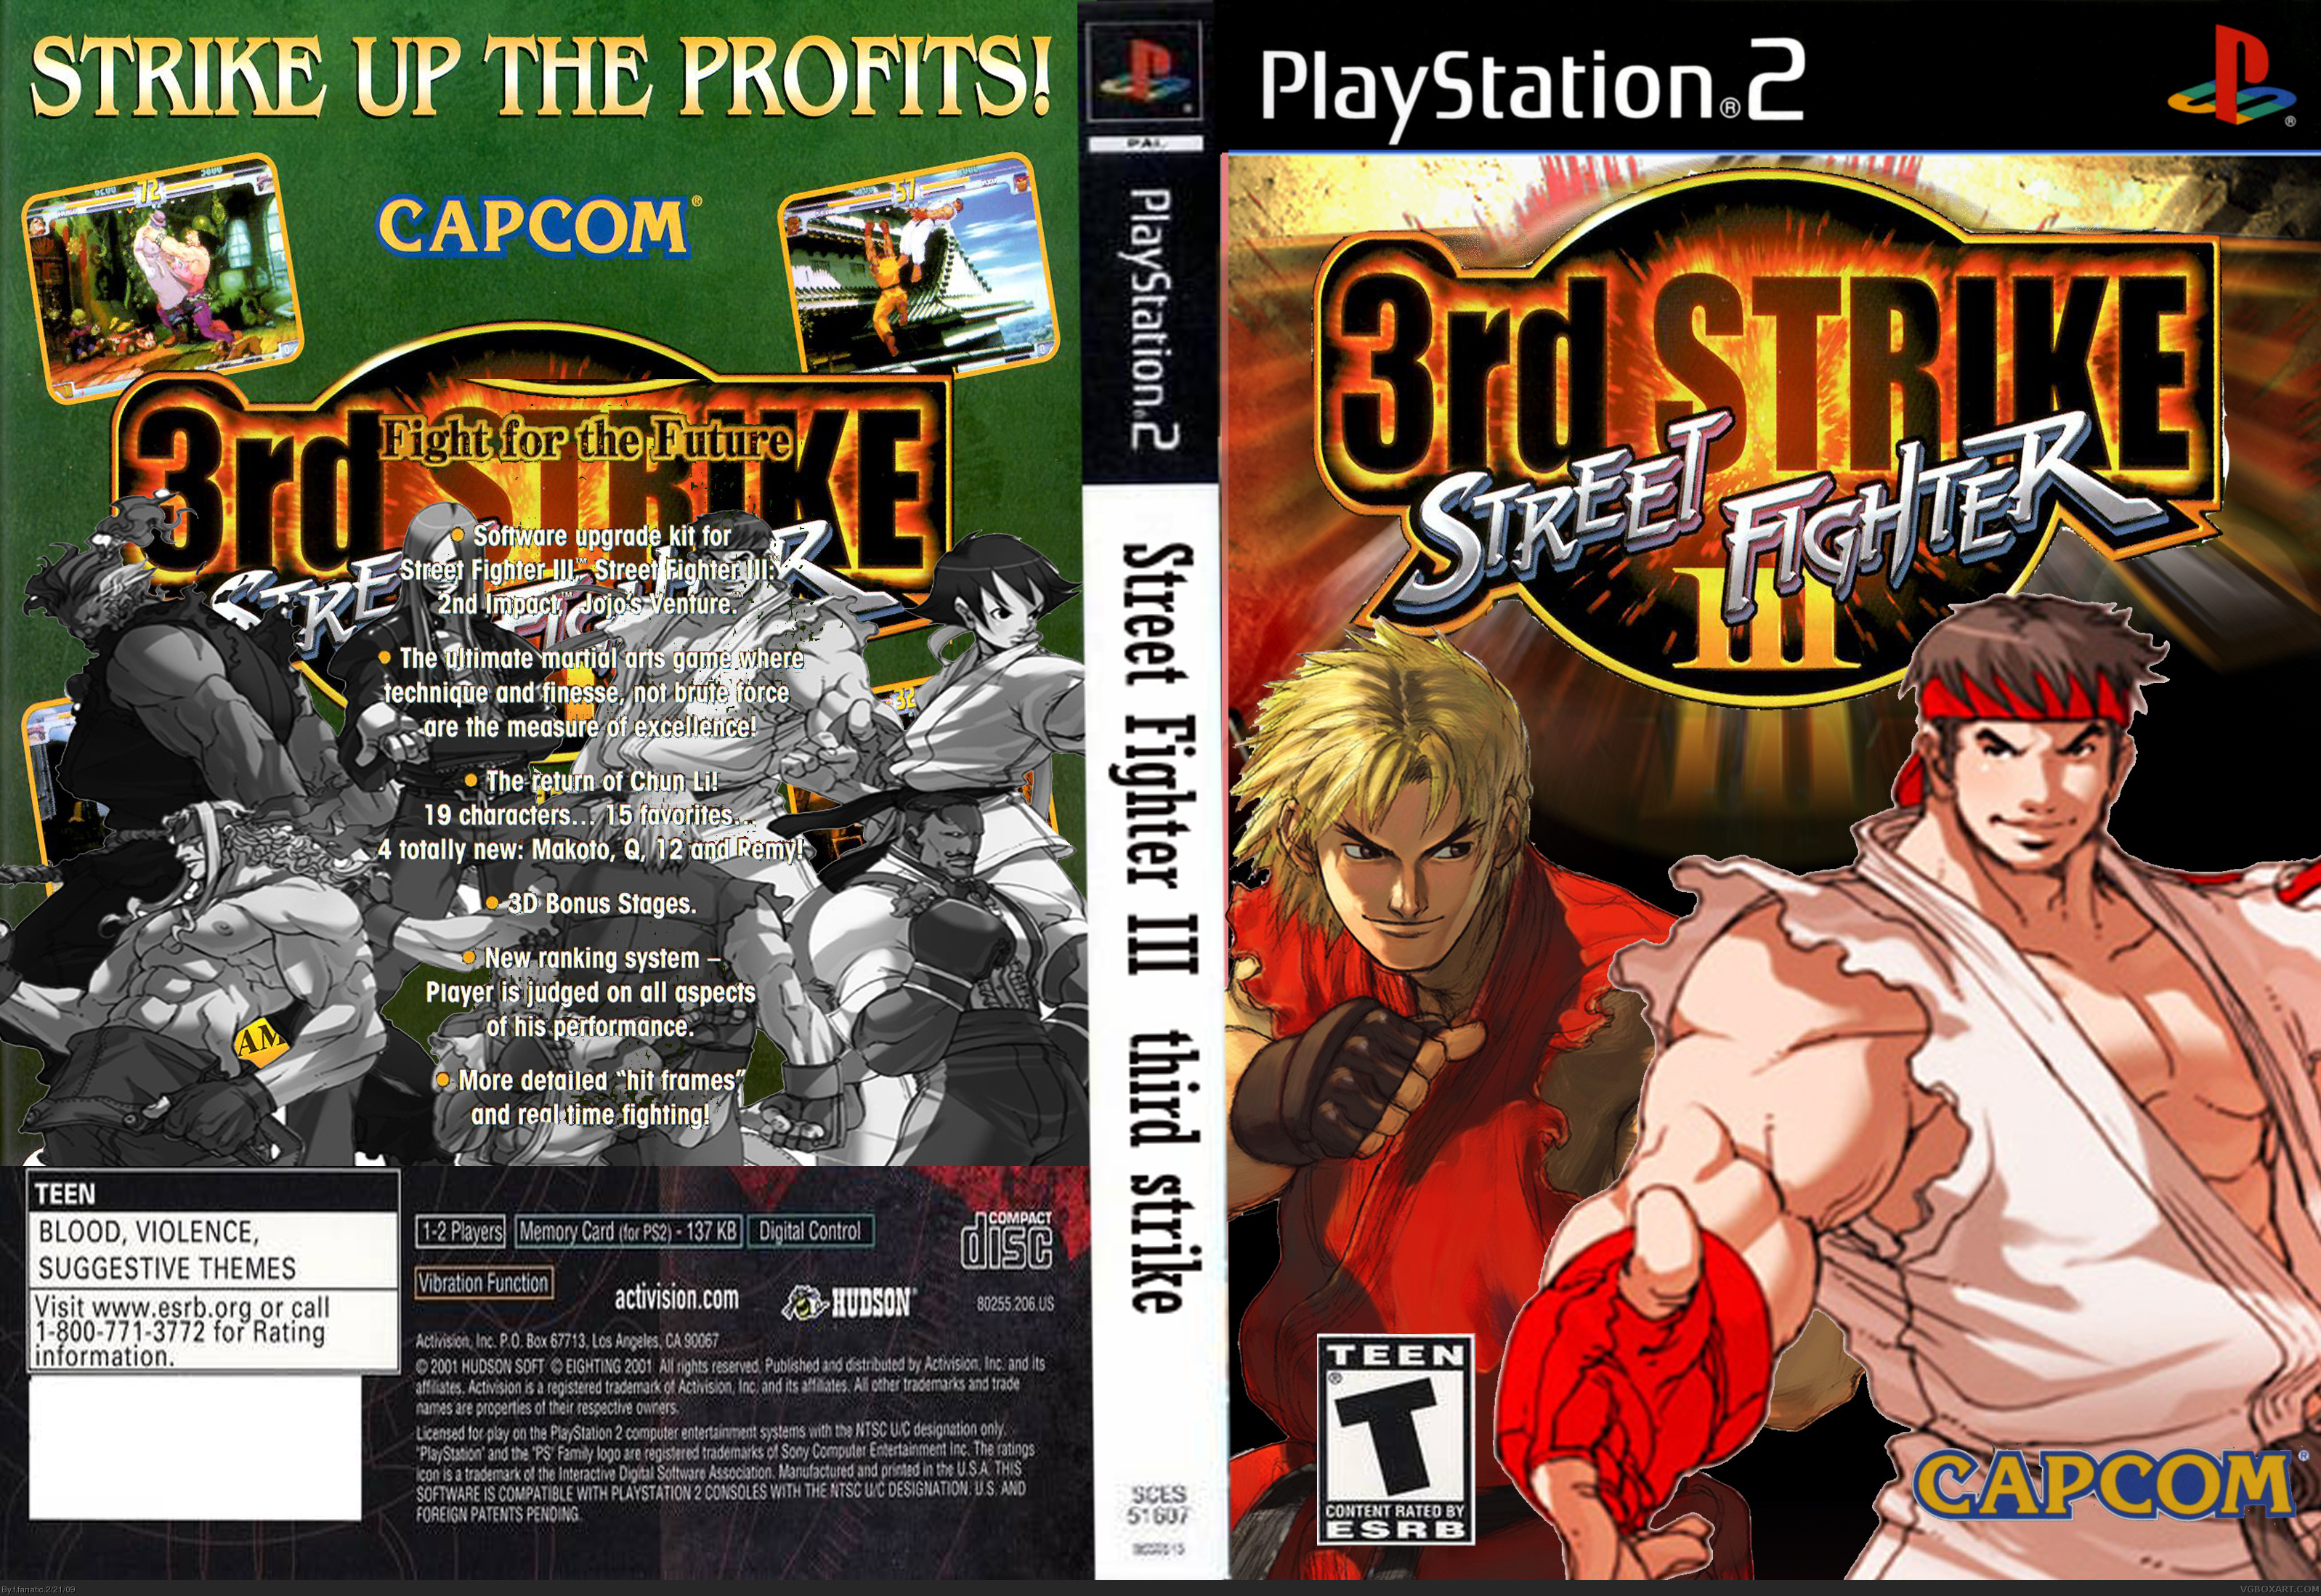 High Resolution Wallpaper | Street Fighter III: 3rd Strike 3195x2197 px